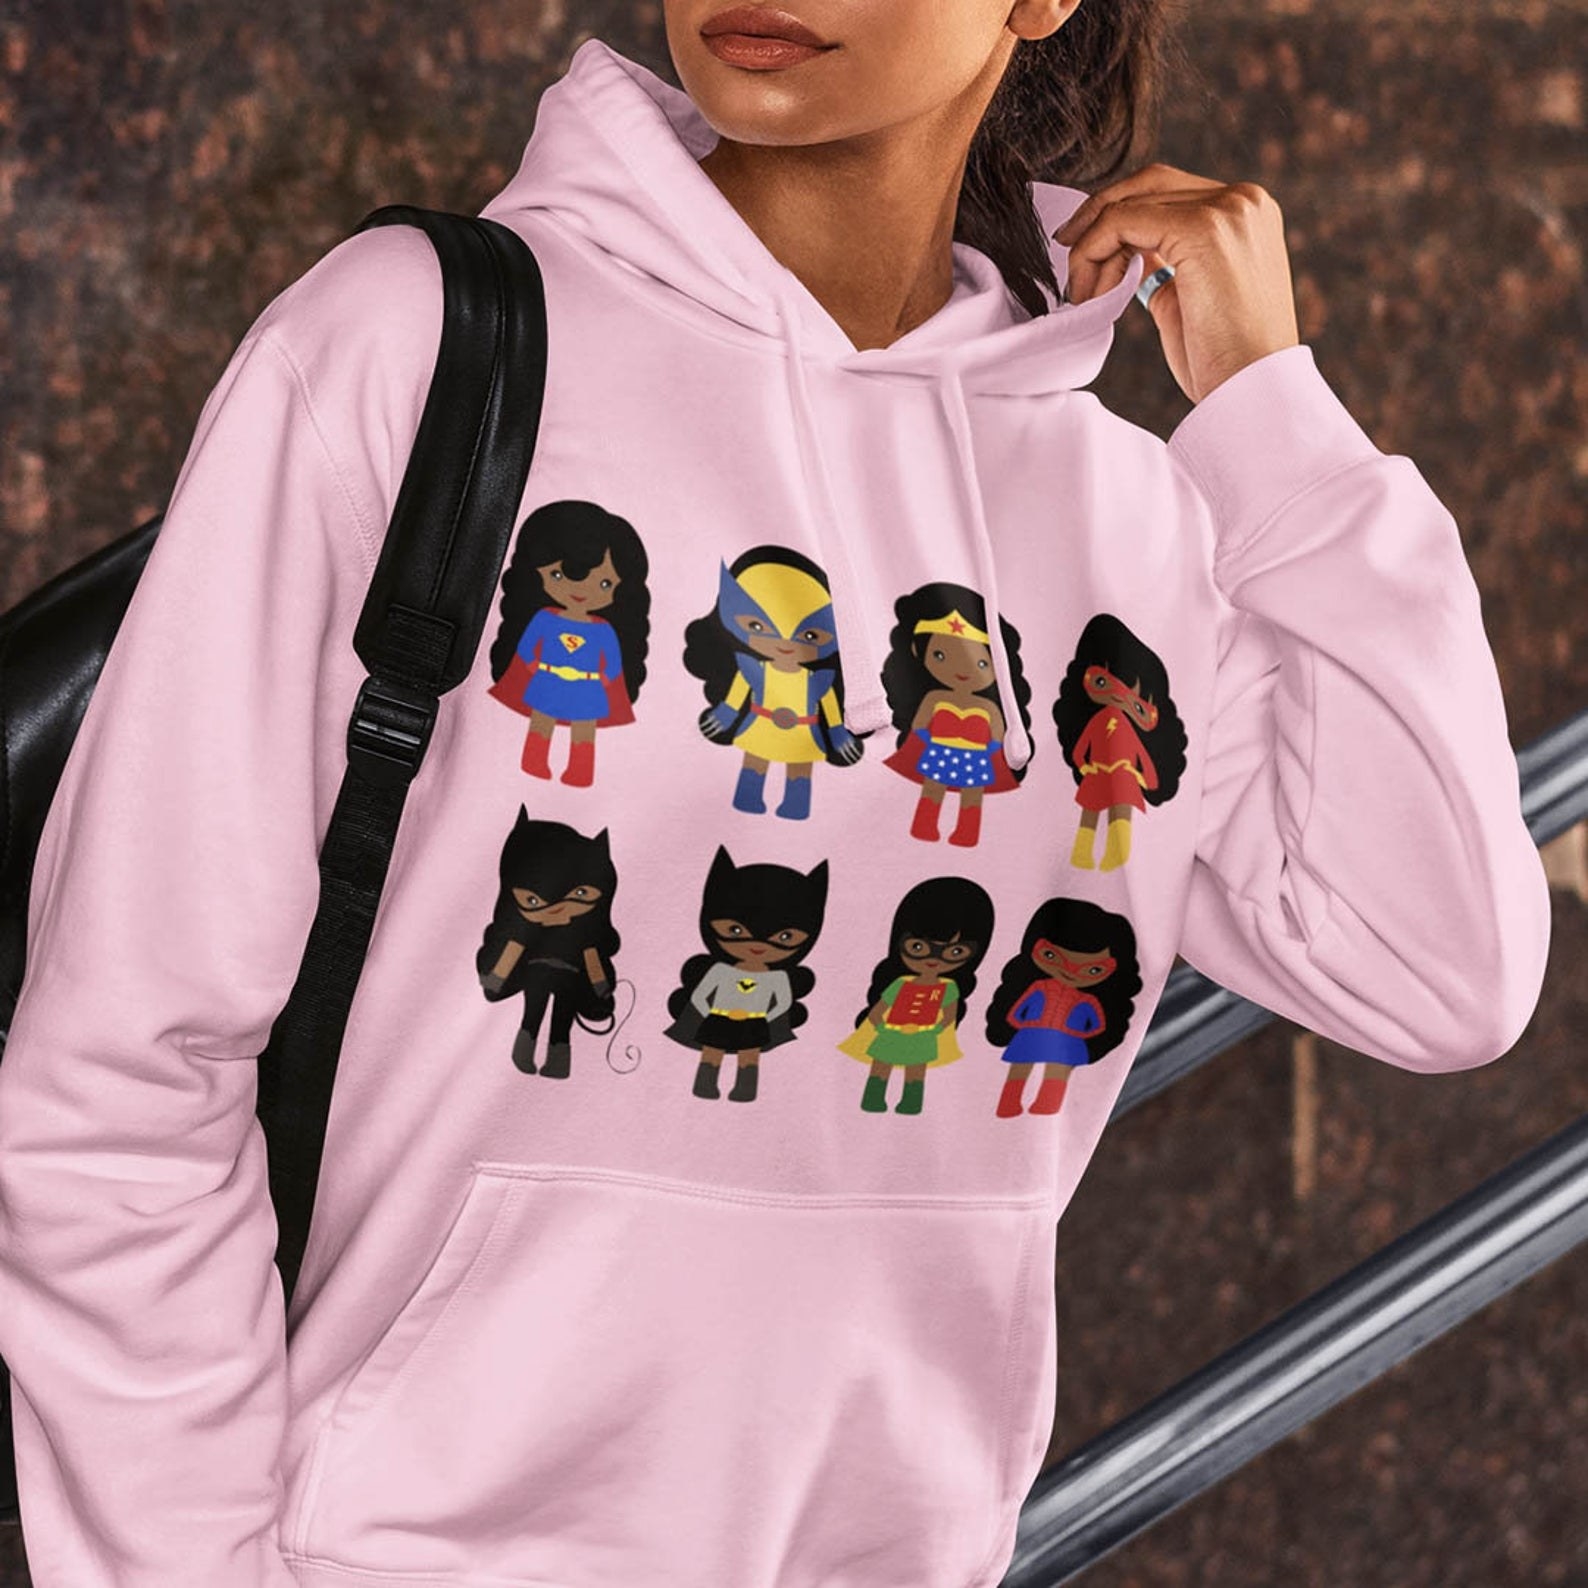 pink hoodie with brown-skinned cartoon superheros including Superman, Wolverine, Wonder Woman, Flash, Bat Girl, Catwoman, Robin, and Spider-Man